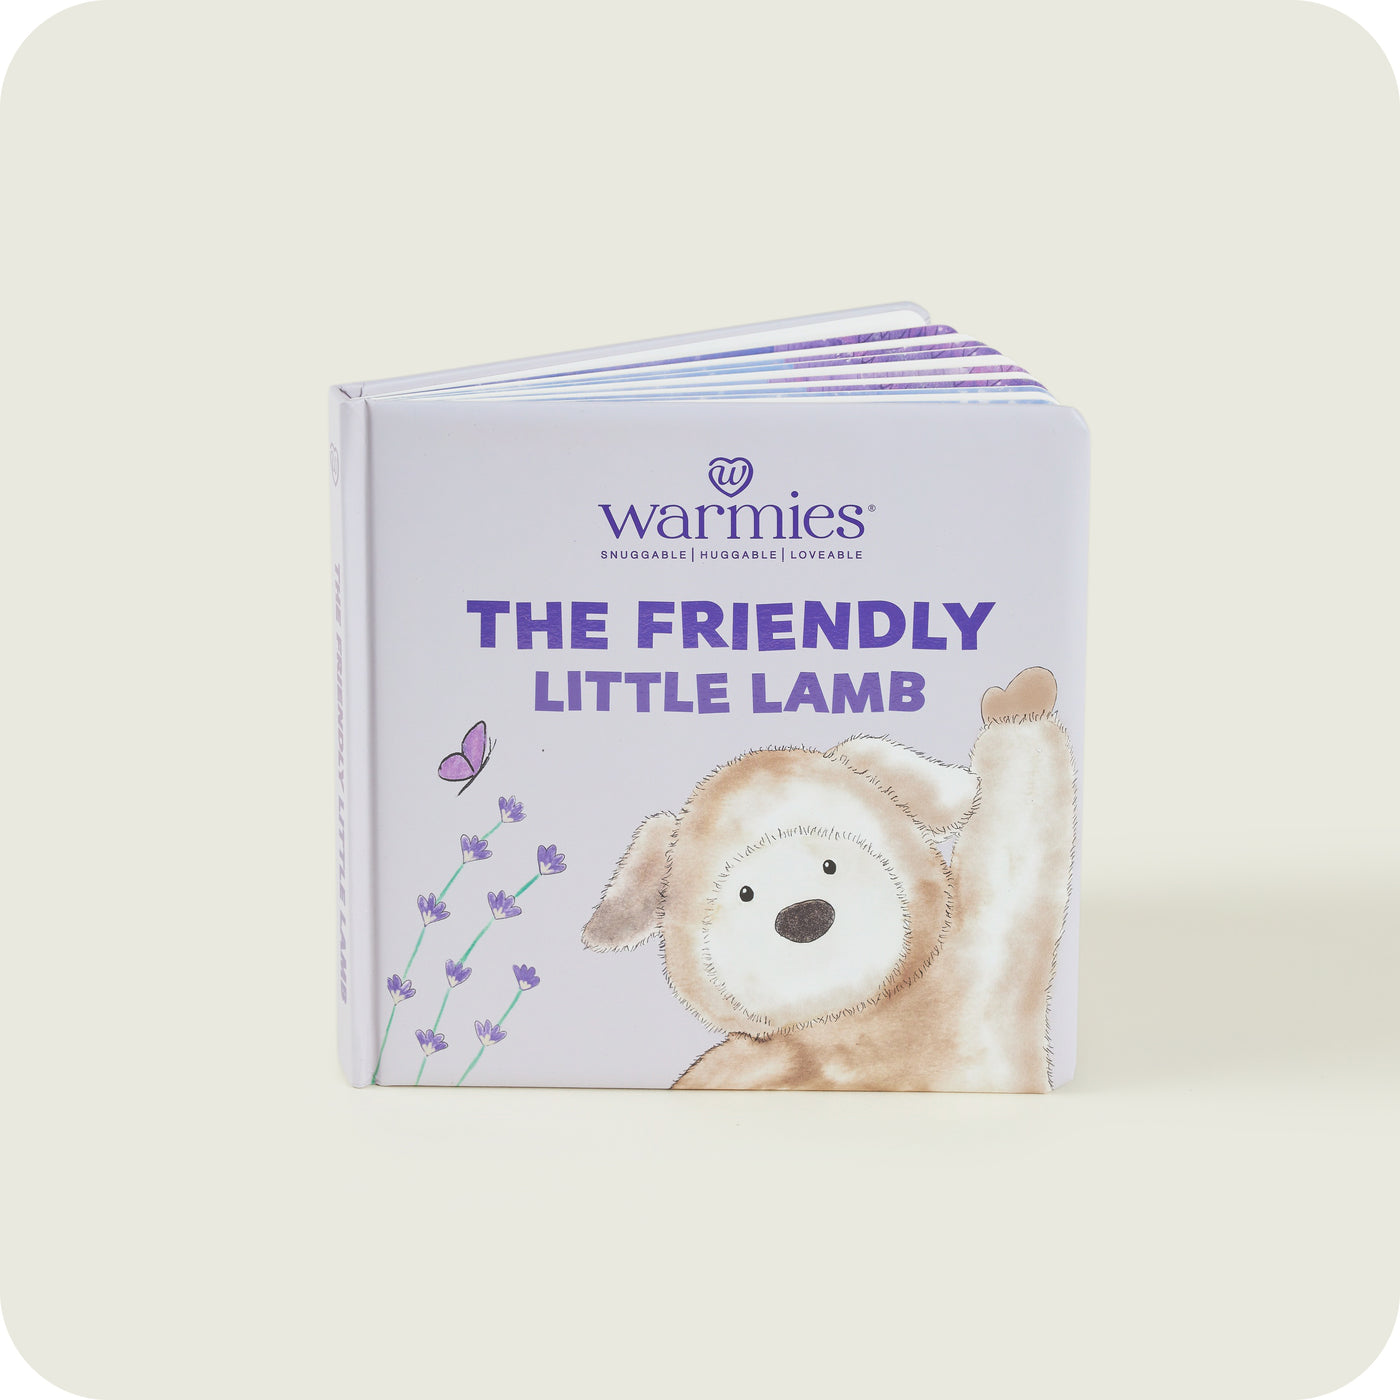 Children's Book - The Friendly Little Lamb